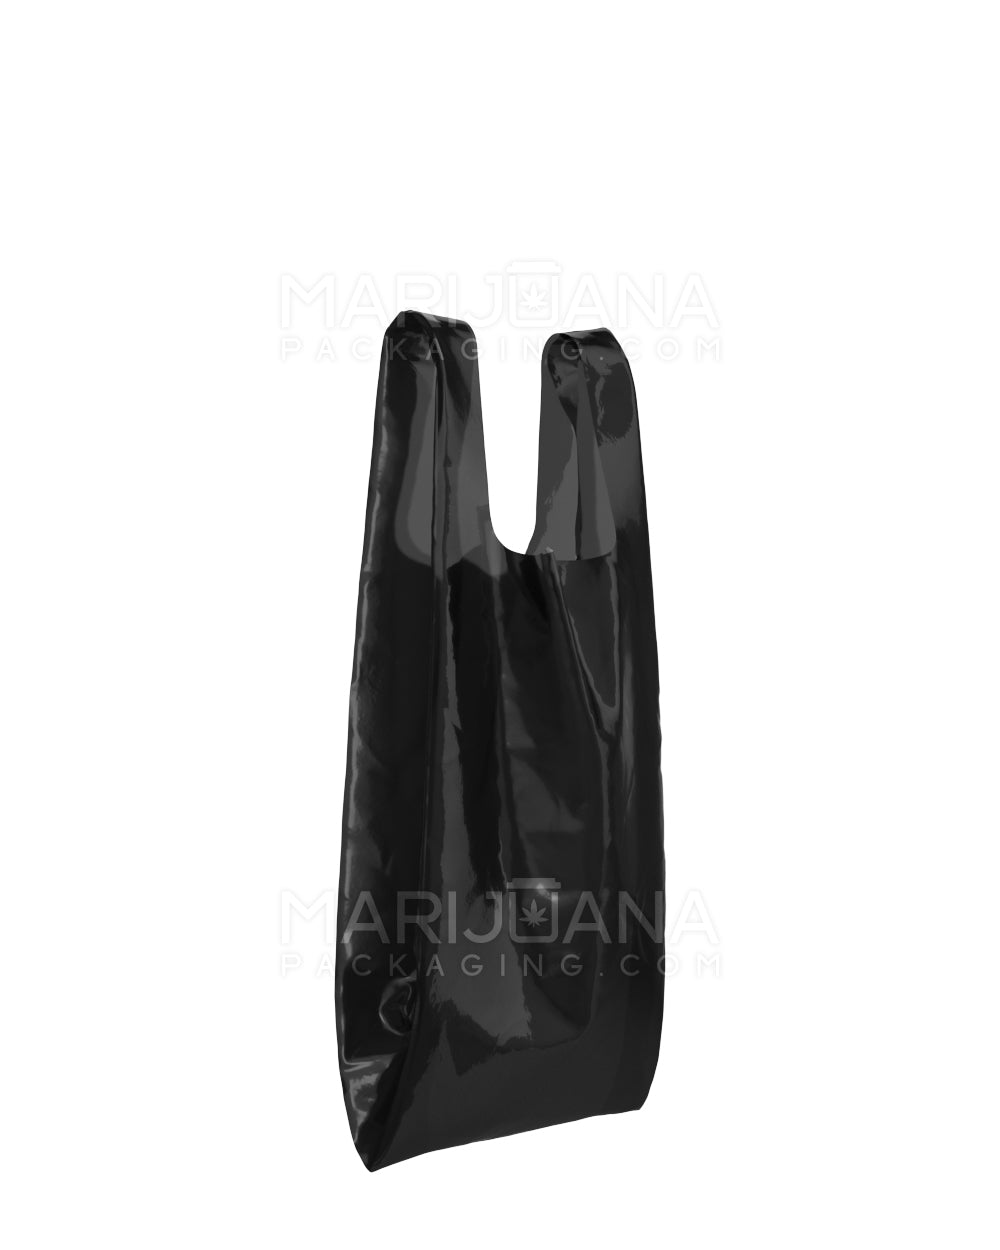 Black Plastic Bag - Small - 8 x 4 x 16 - 1000 Count